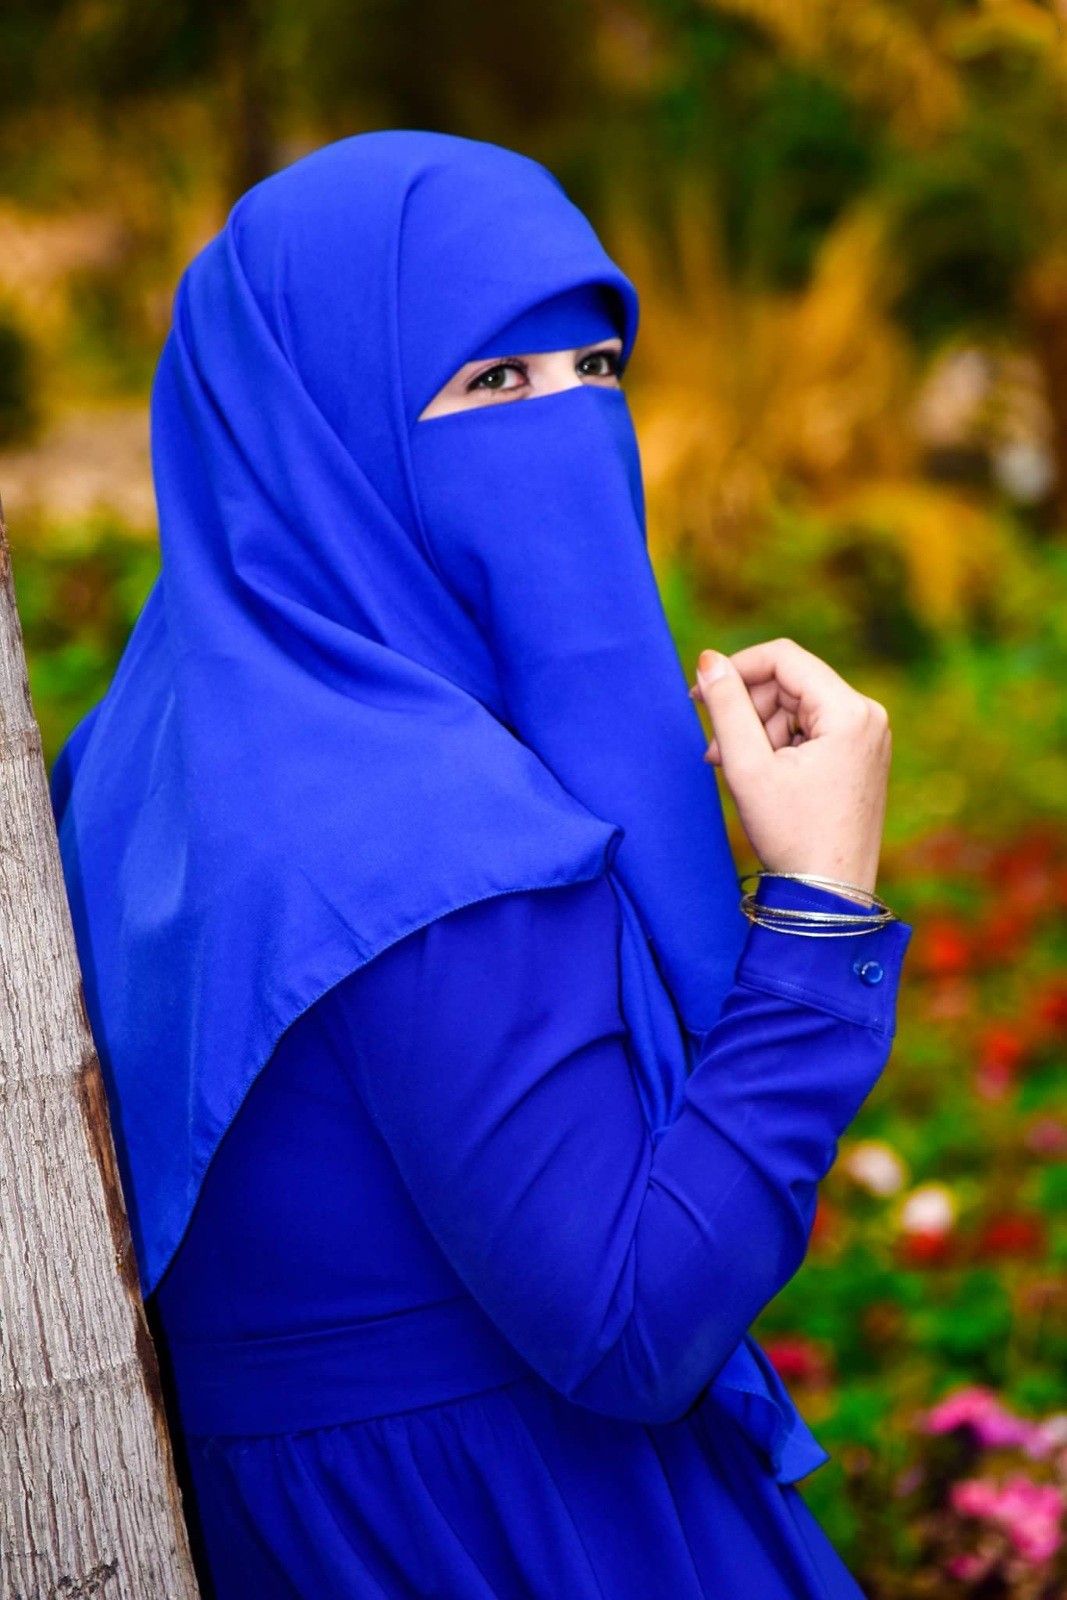 Hijab Girls Pics Hijab Girls Fashion Picture Dp For Whatsapp